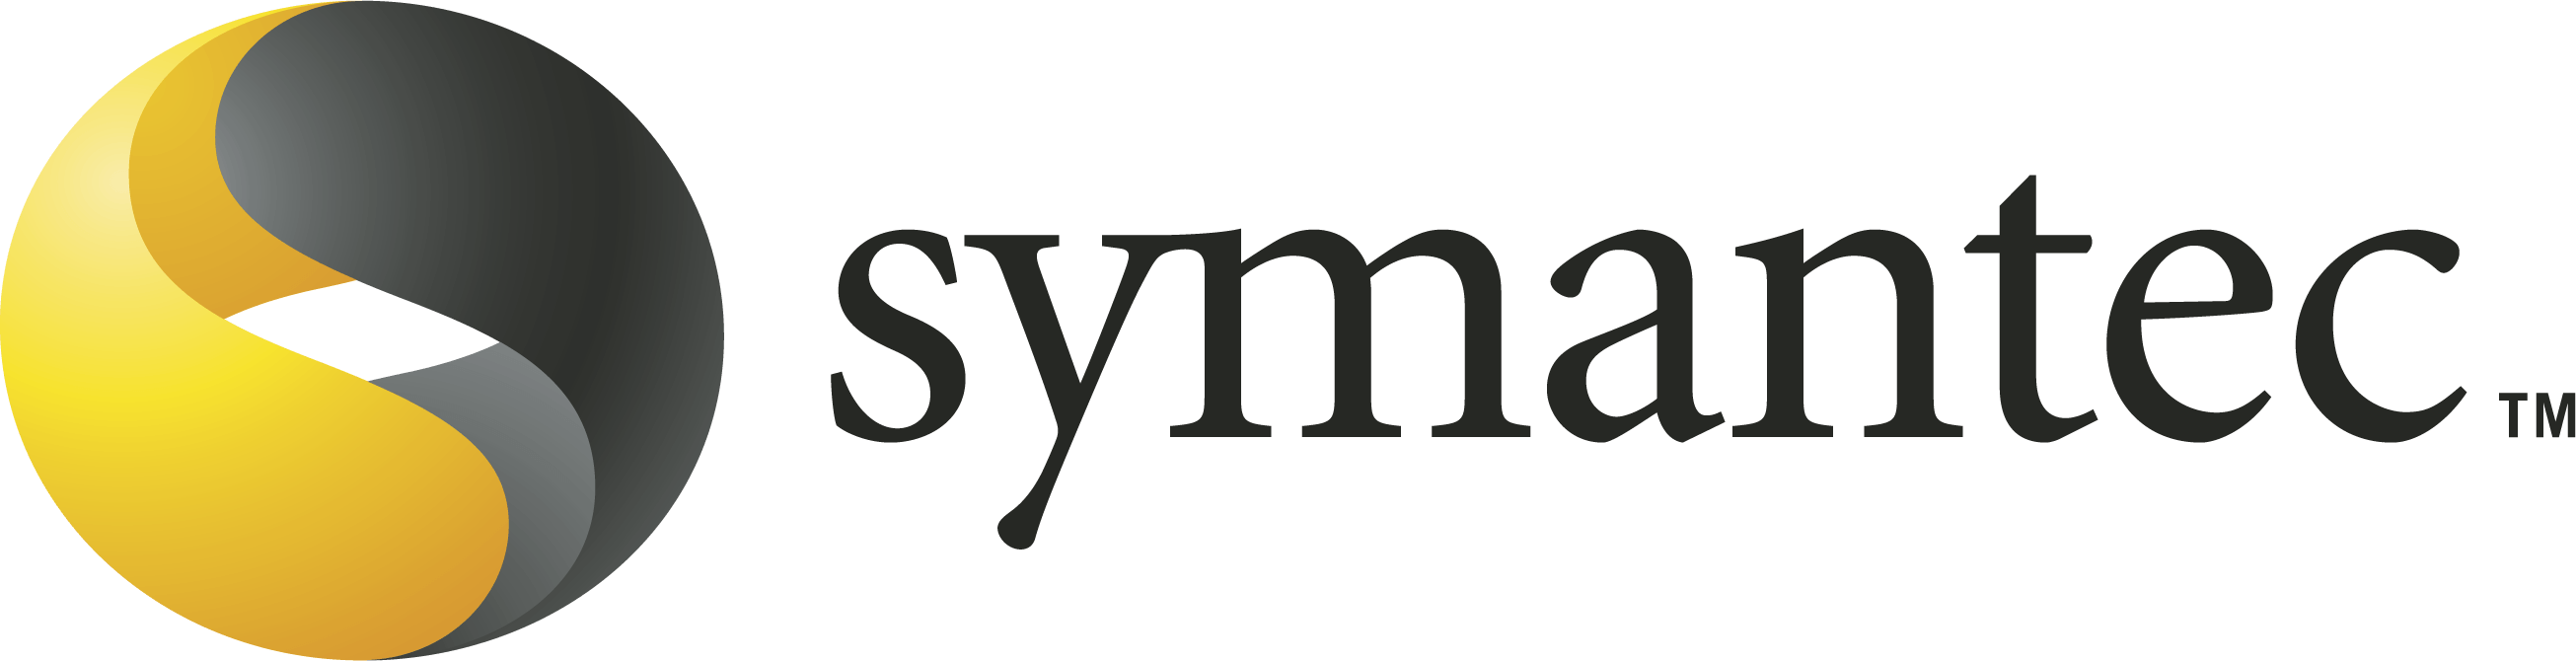 Symantec Logo - Symantec | Logopedia | FANDOM powered by Wikia